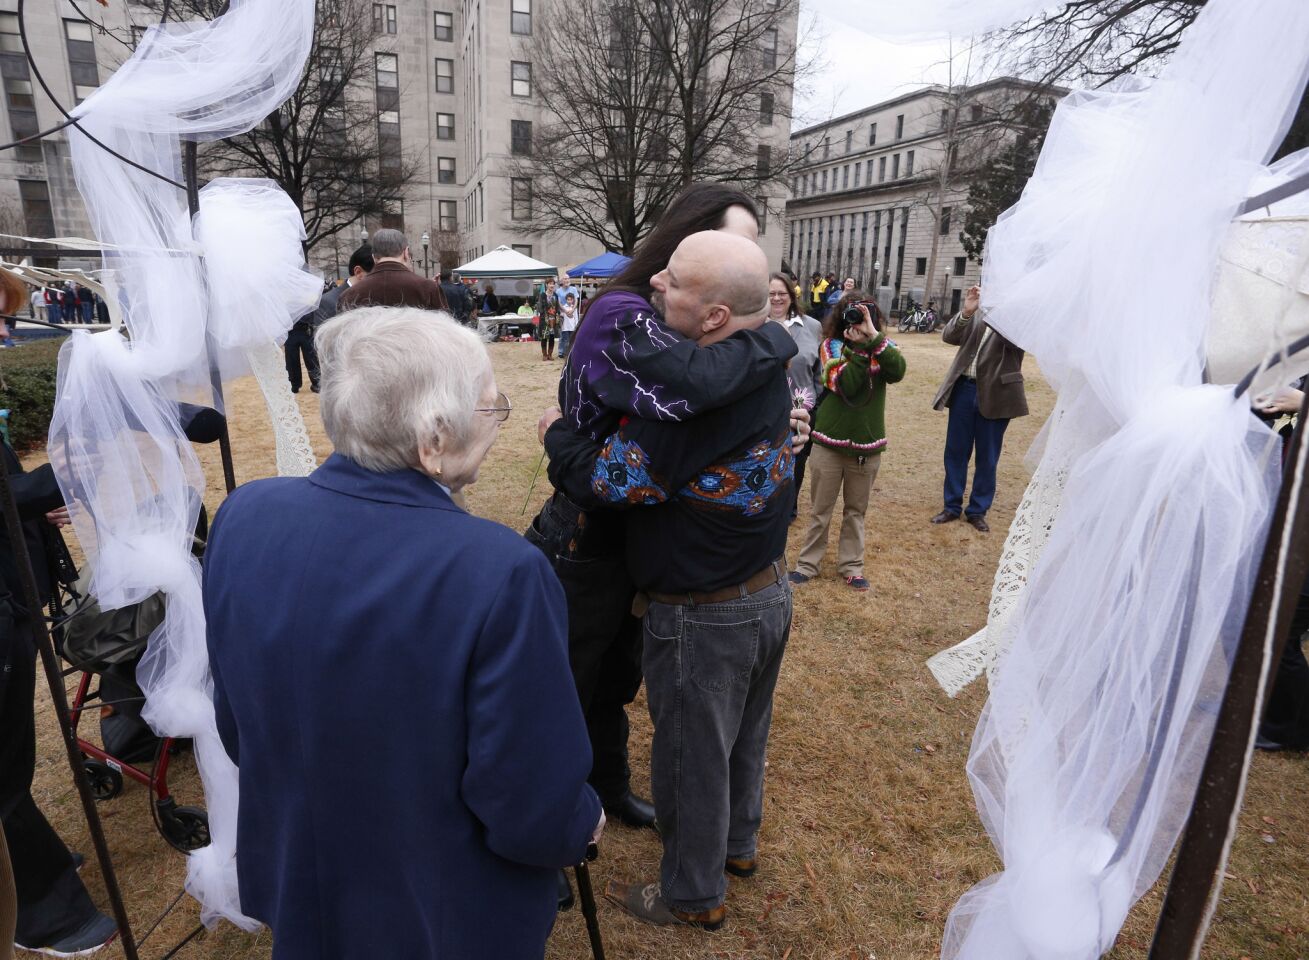 Steve Davis, left, and James Farless hug after being married by the Rev. Marge Ragona in Birmingham's Linn Park.